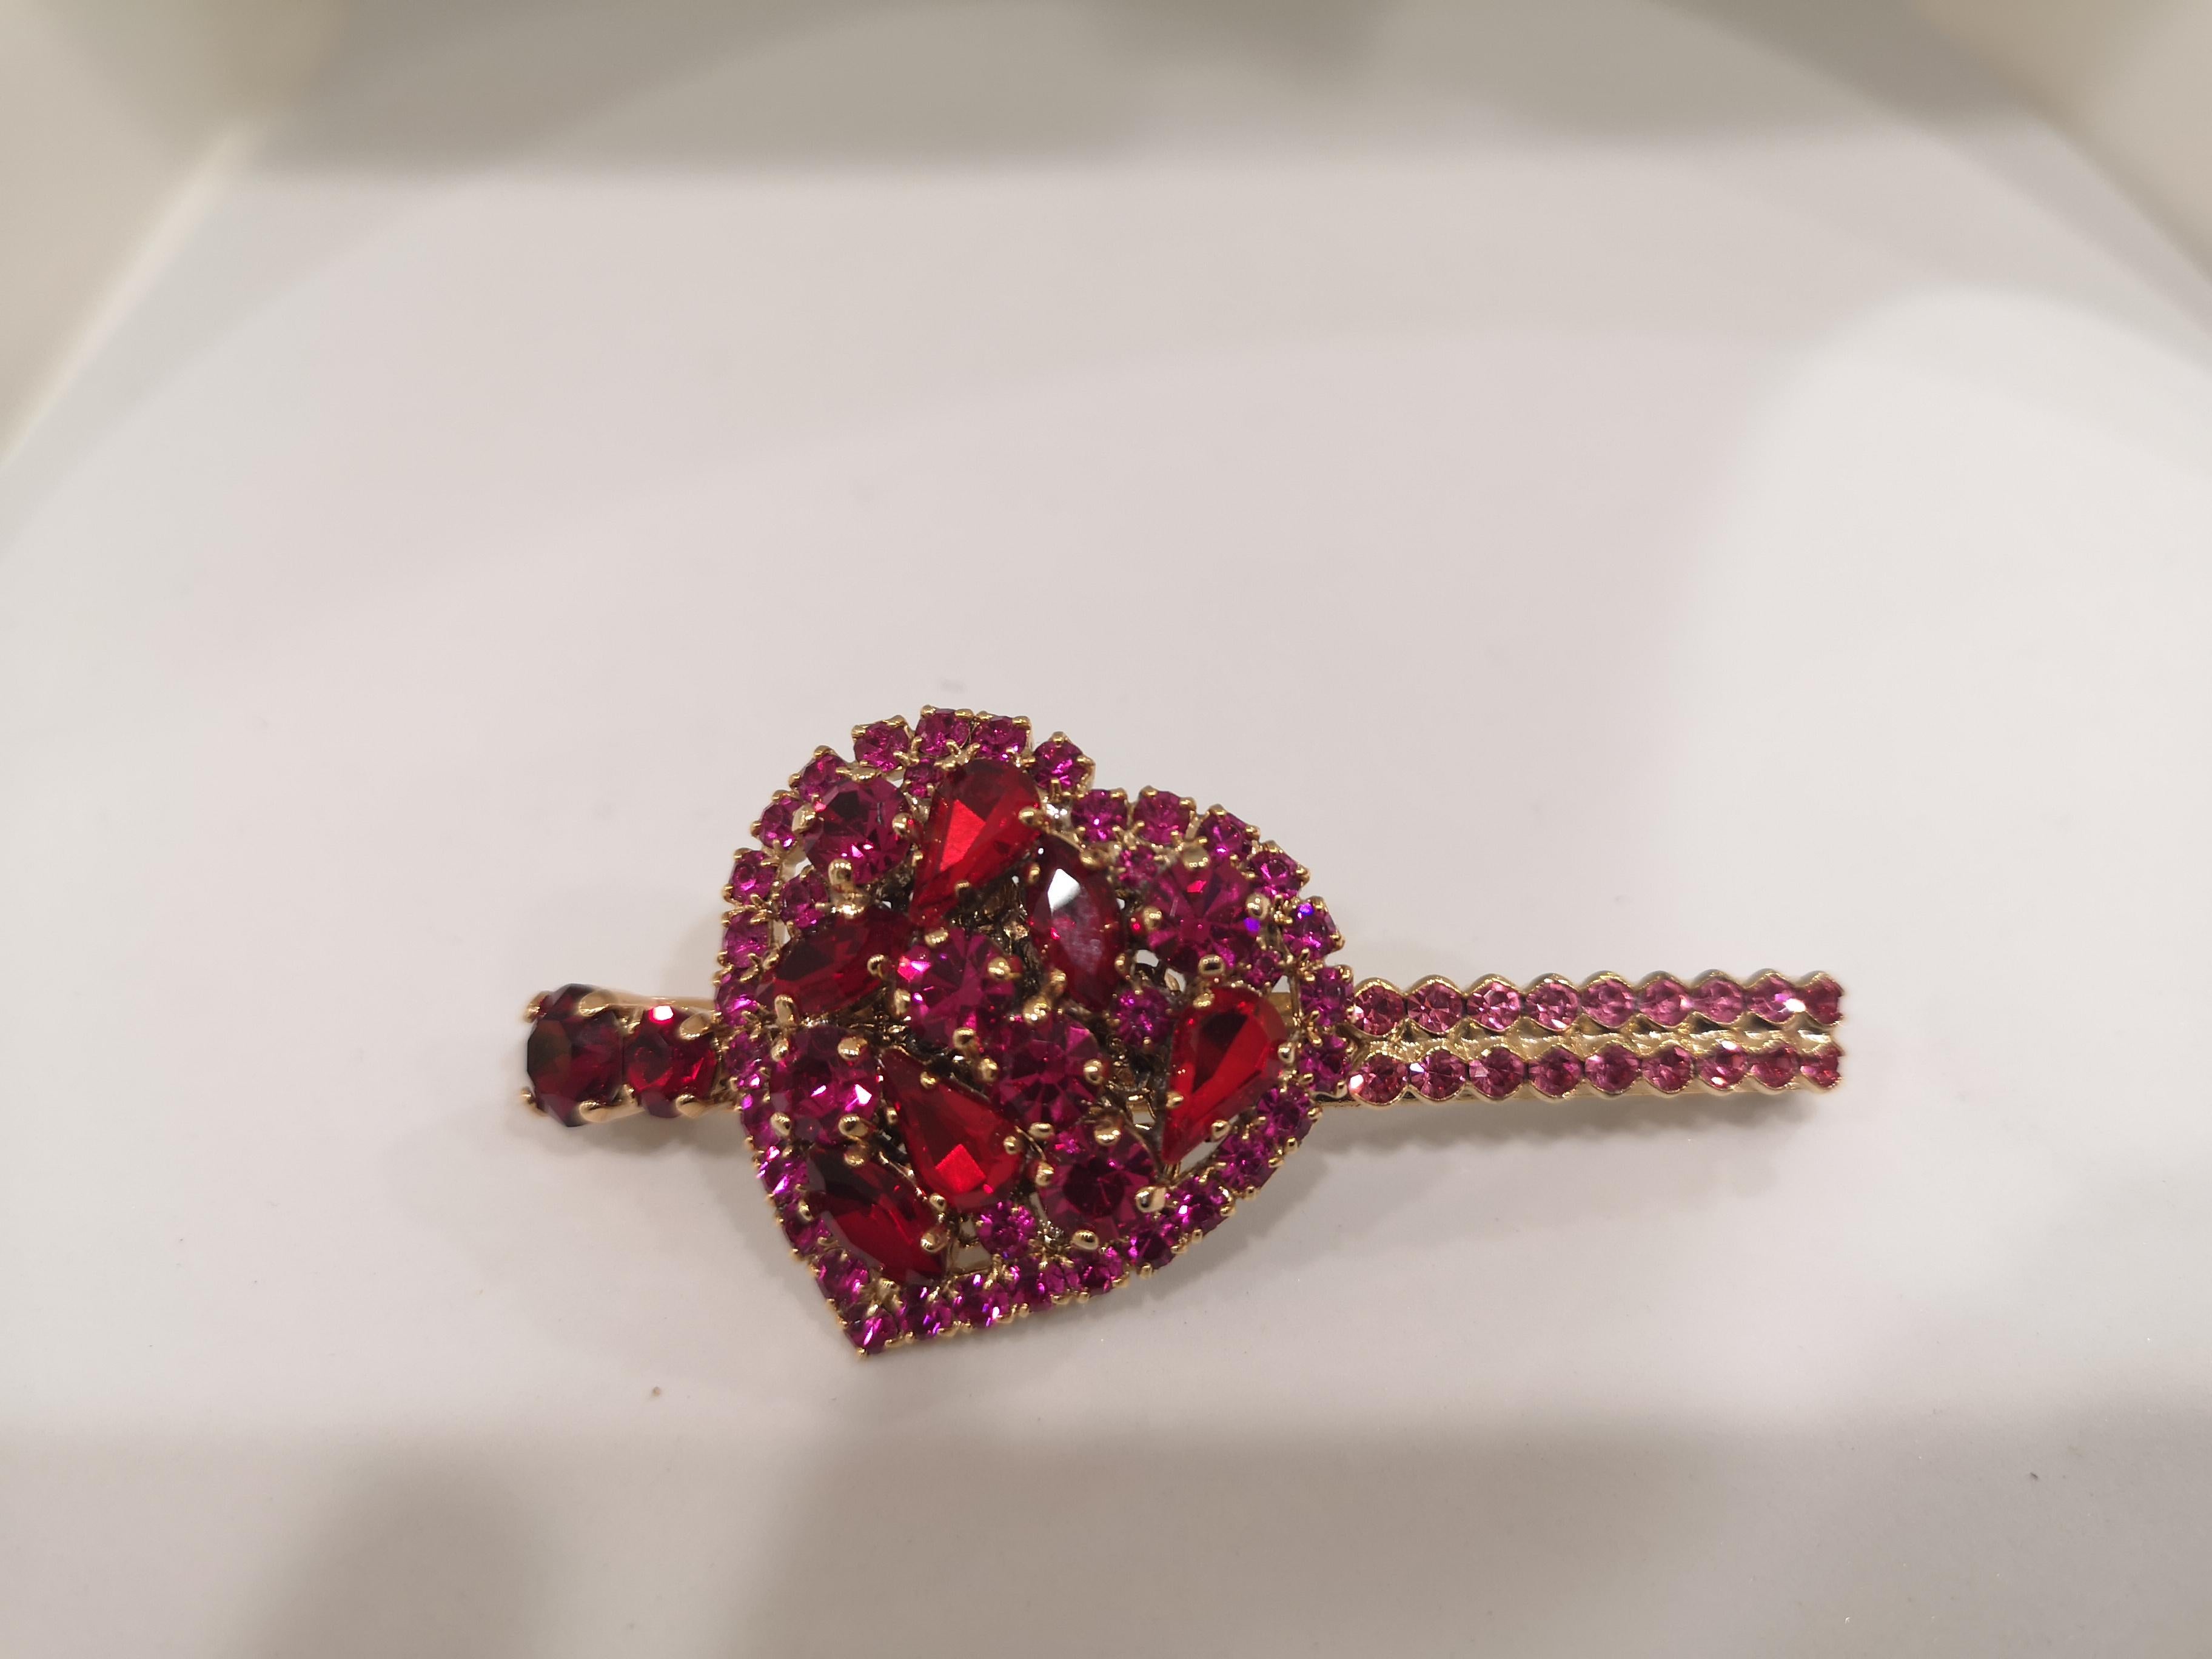 LisaC swarovski heart clip
totally handmade in italy with real swarovski stones
measurements: 9 cm